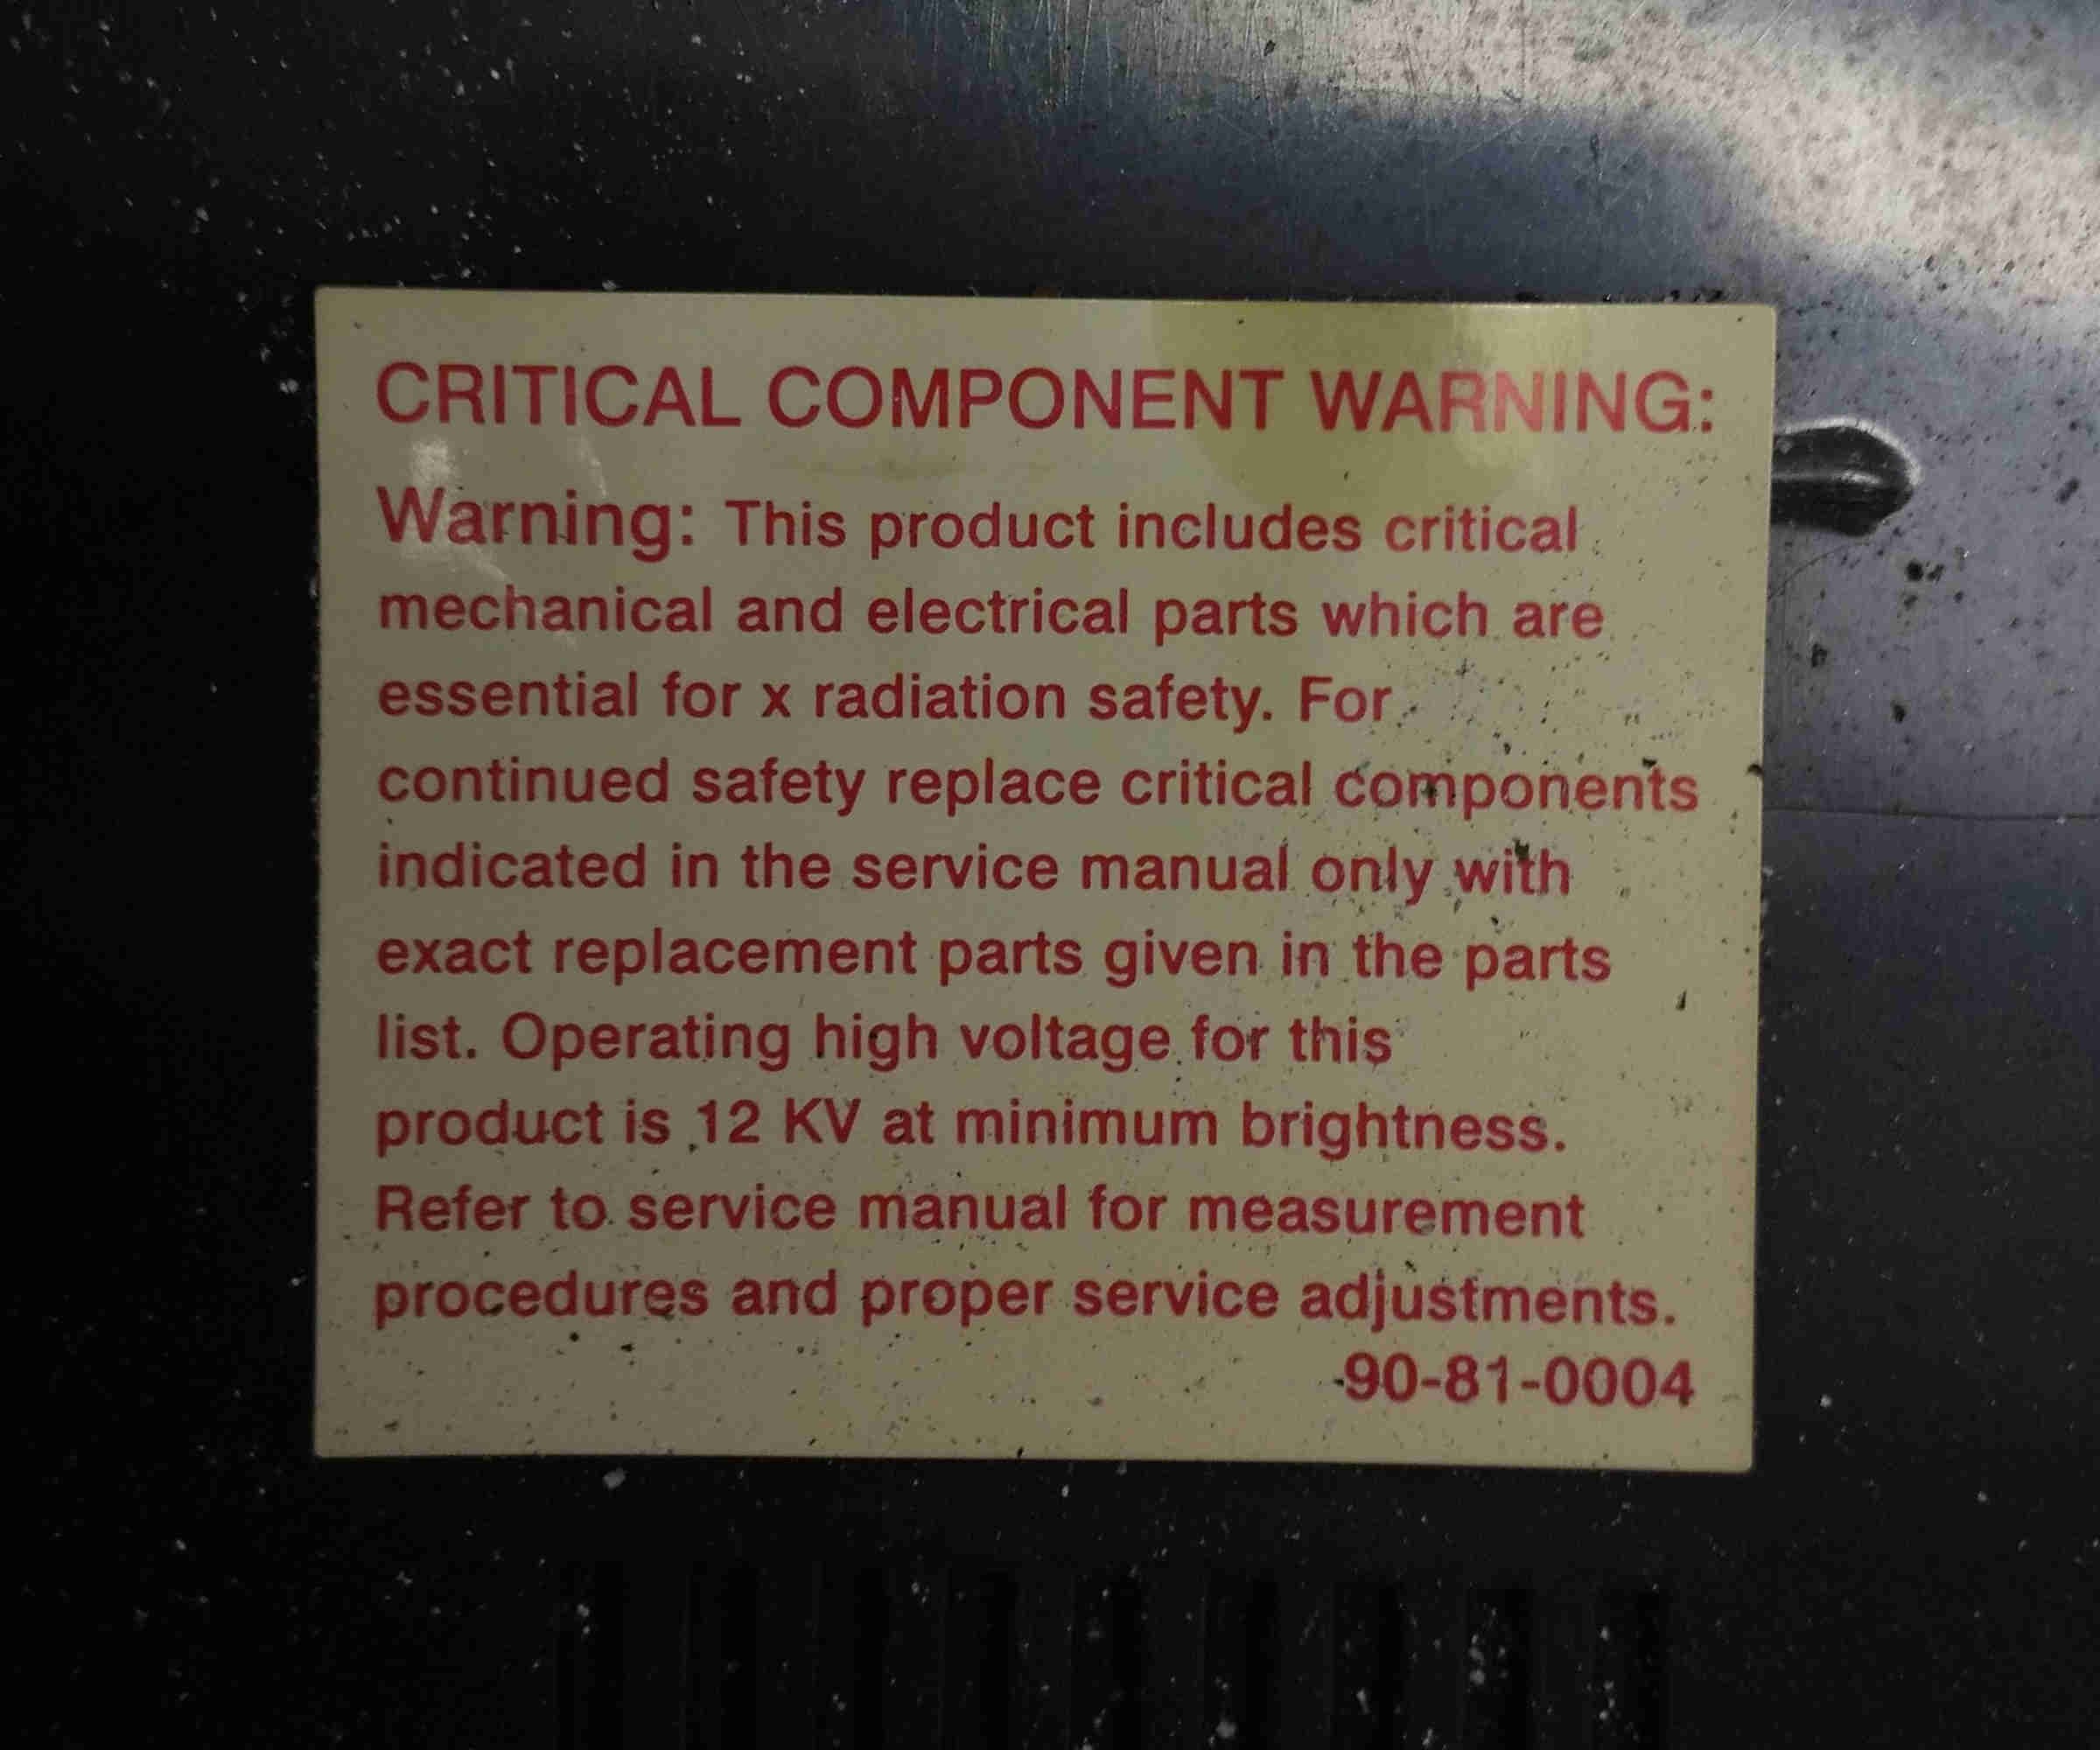 High voltage warning label